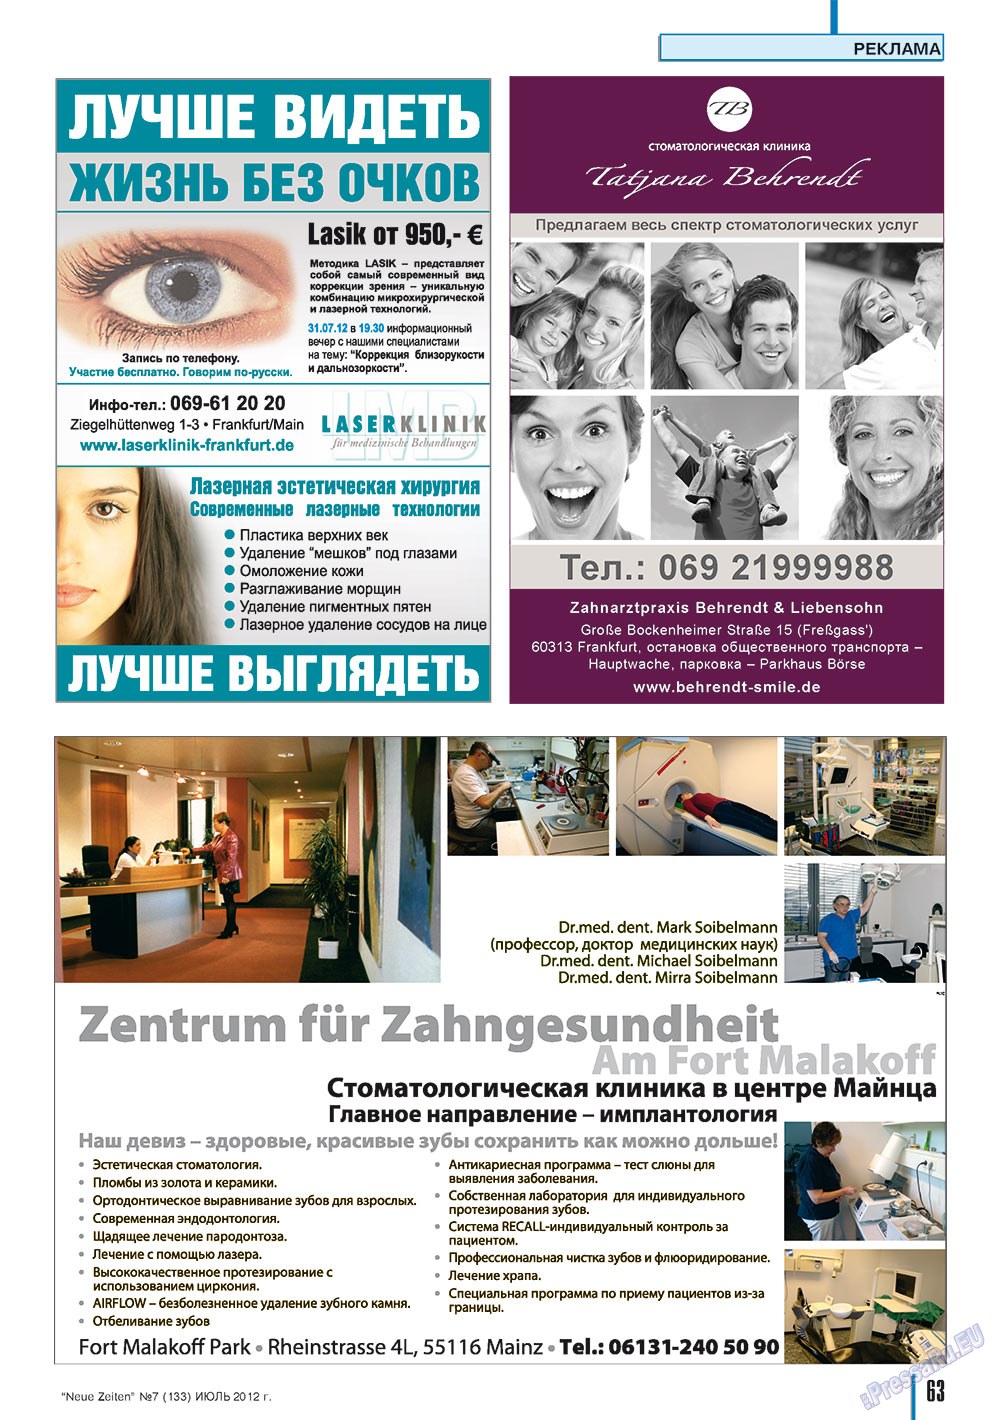 Neue Zeiten (журнал). 2012 год, номер 7, стр. 63